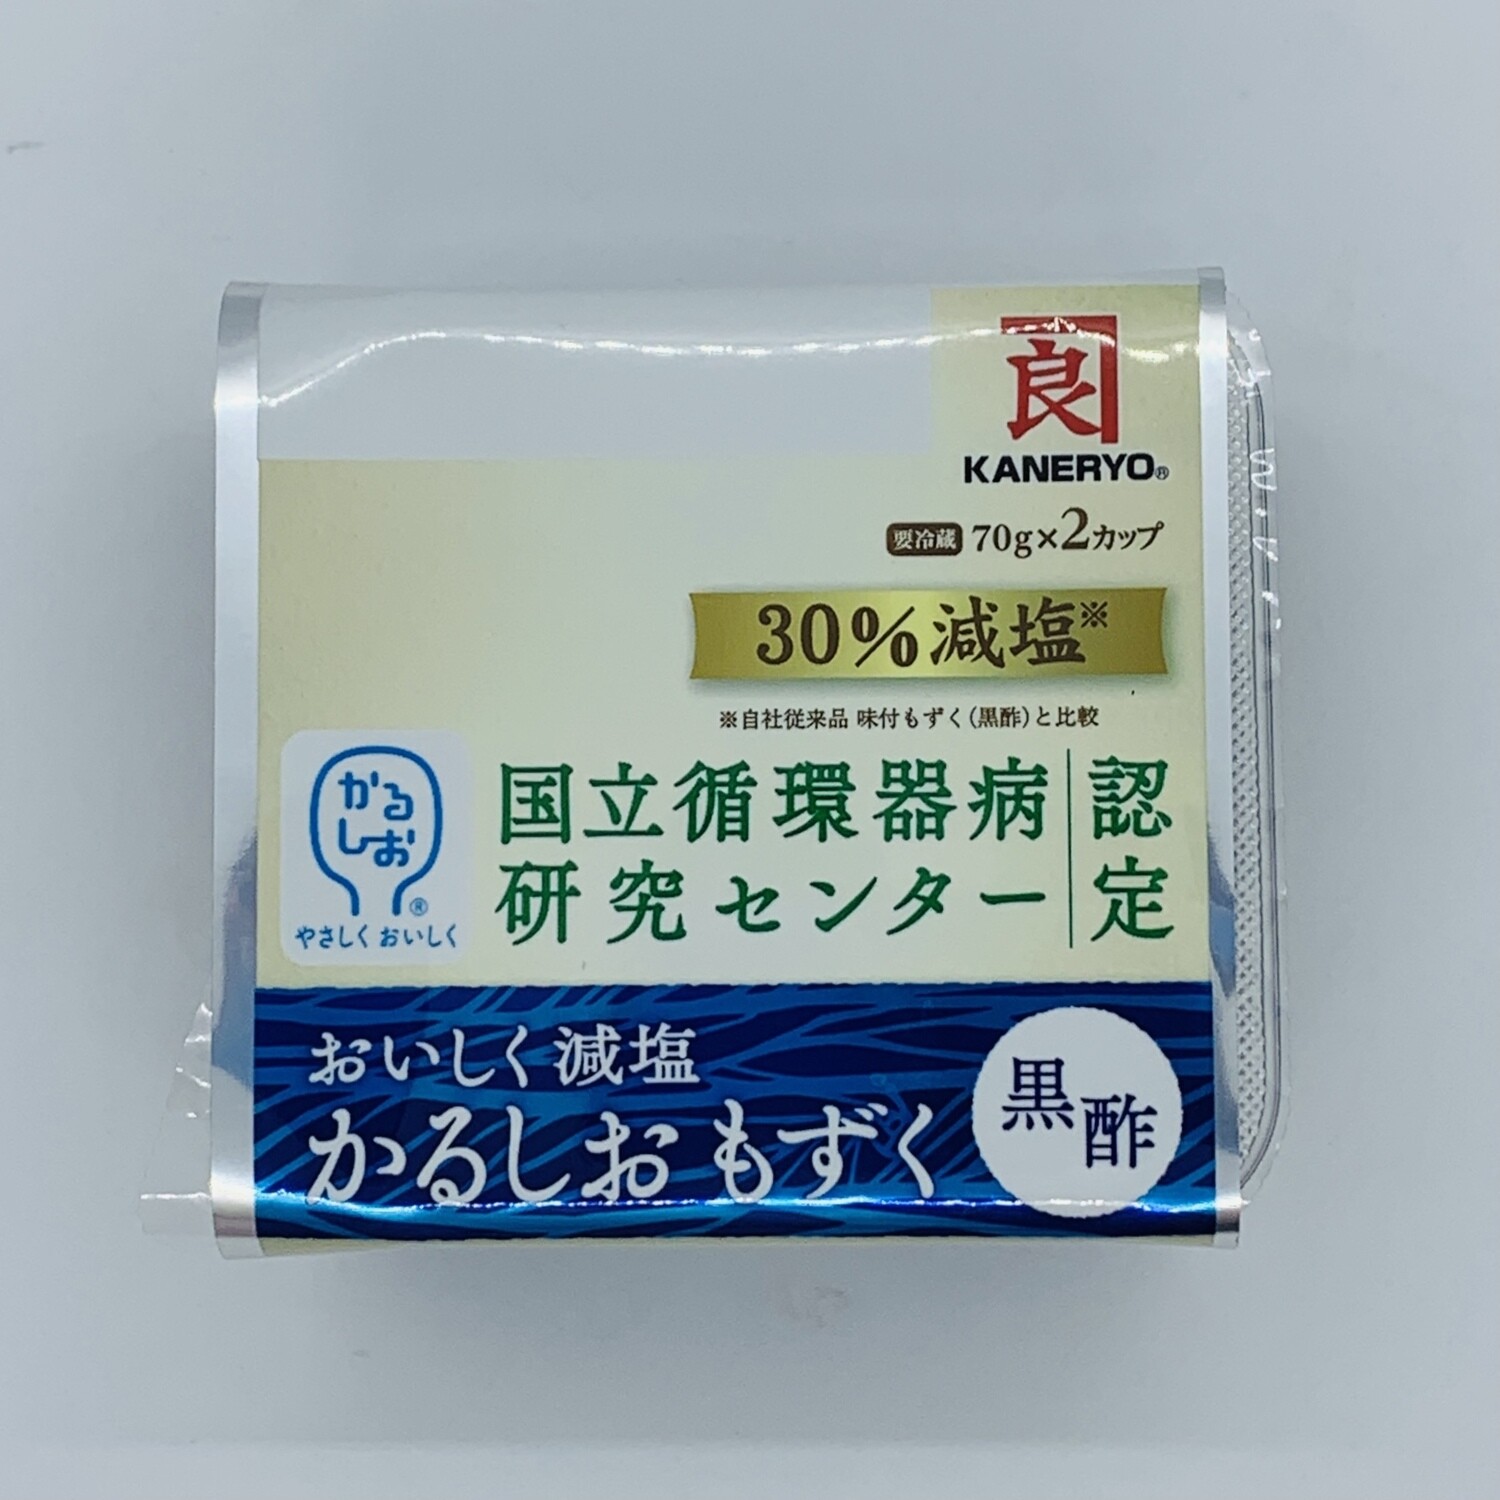 Kaneryo Mozuku 30% Less Salt Kurosu